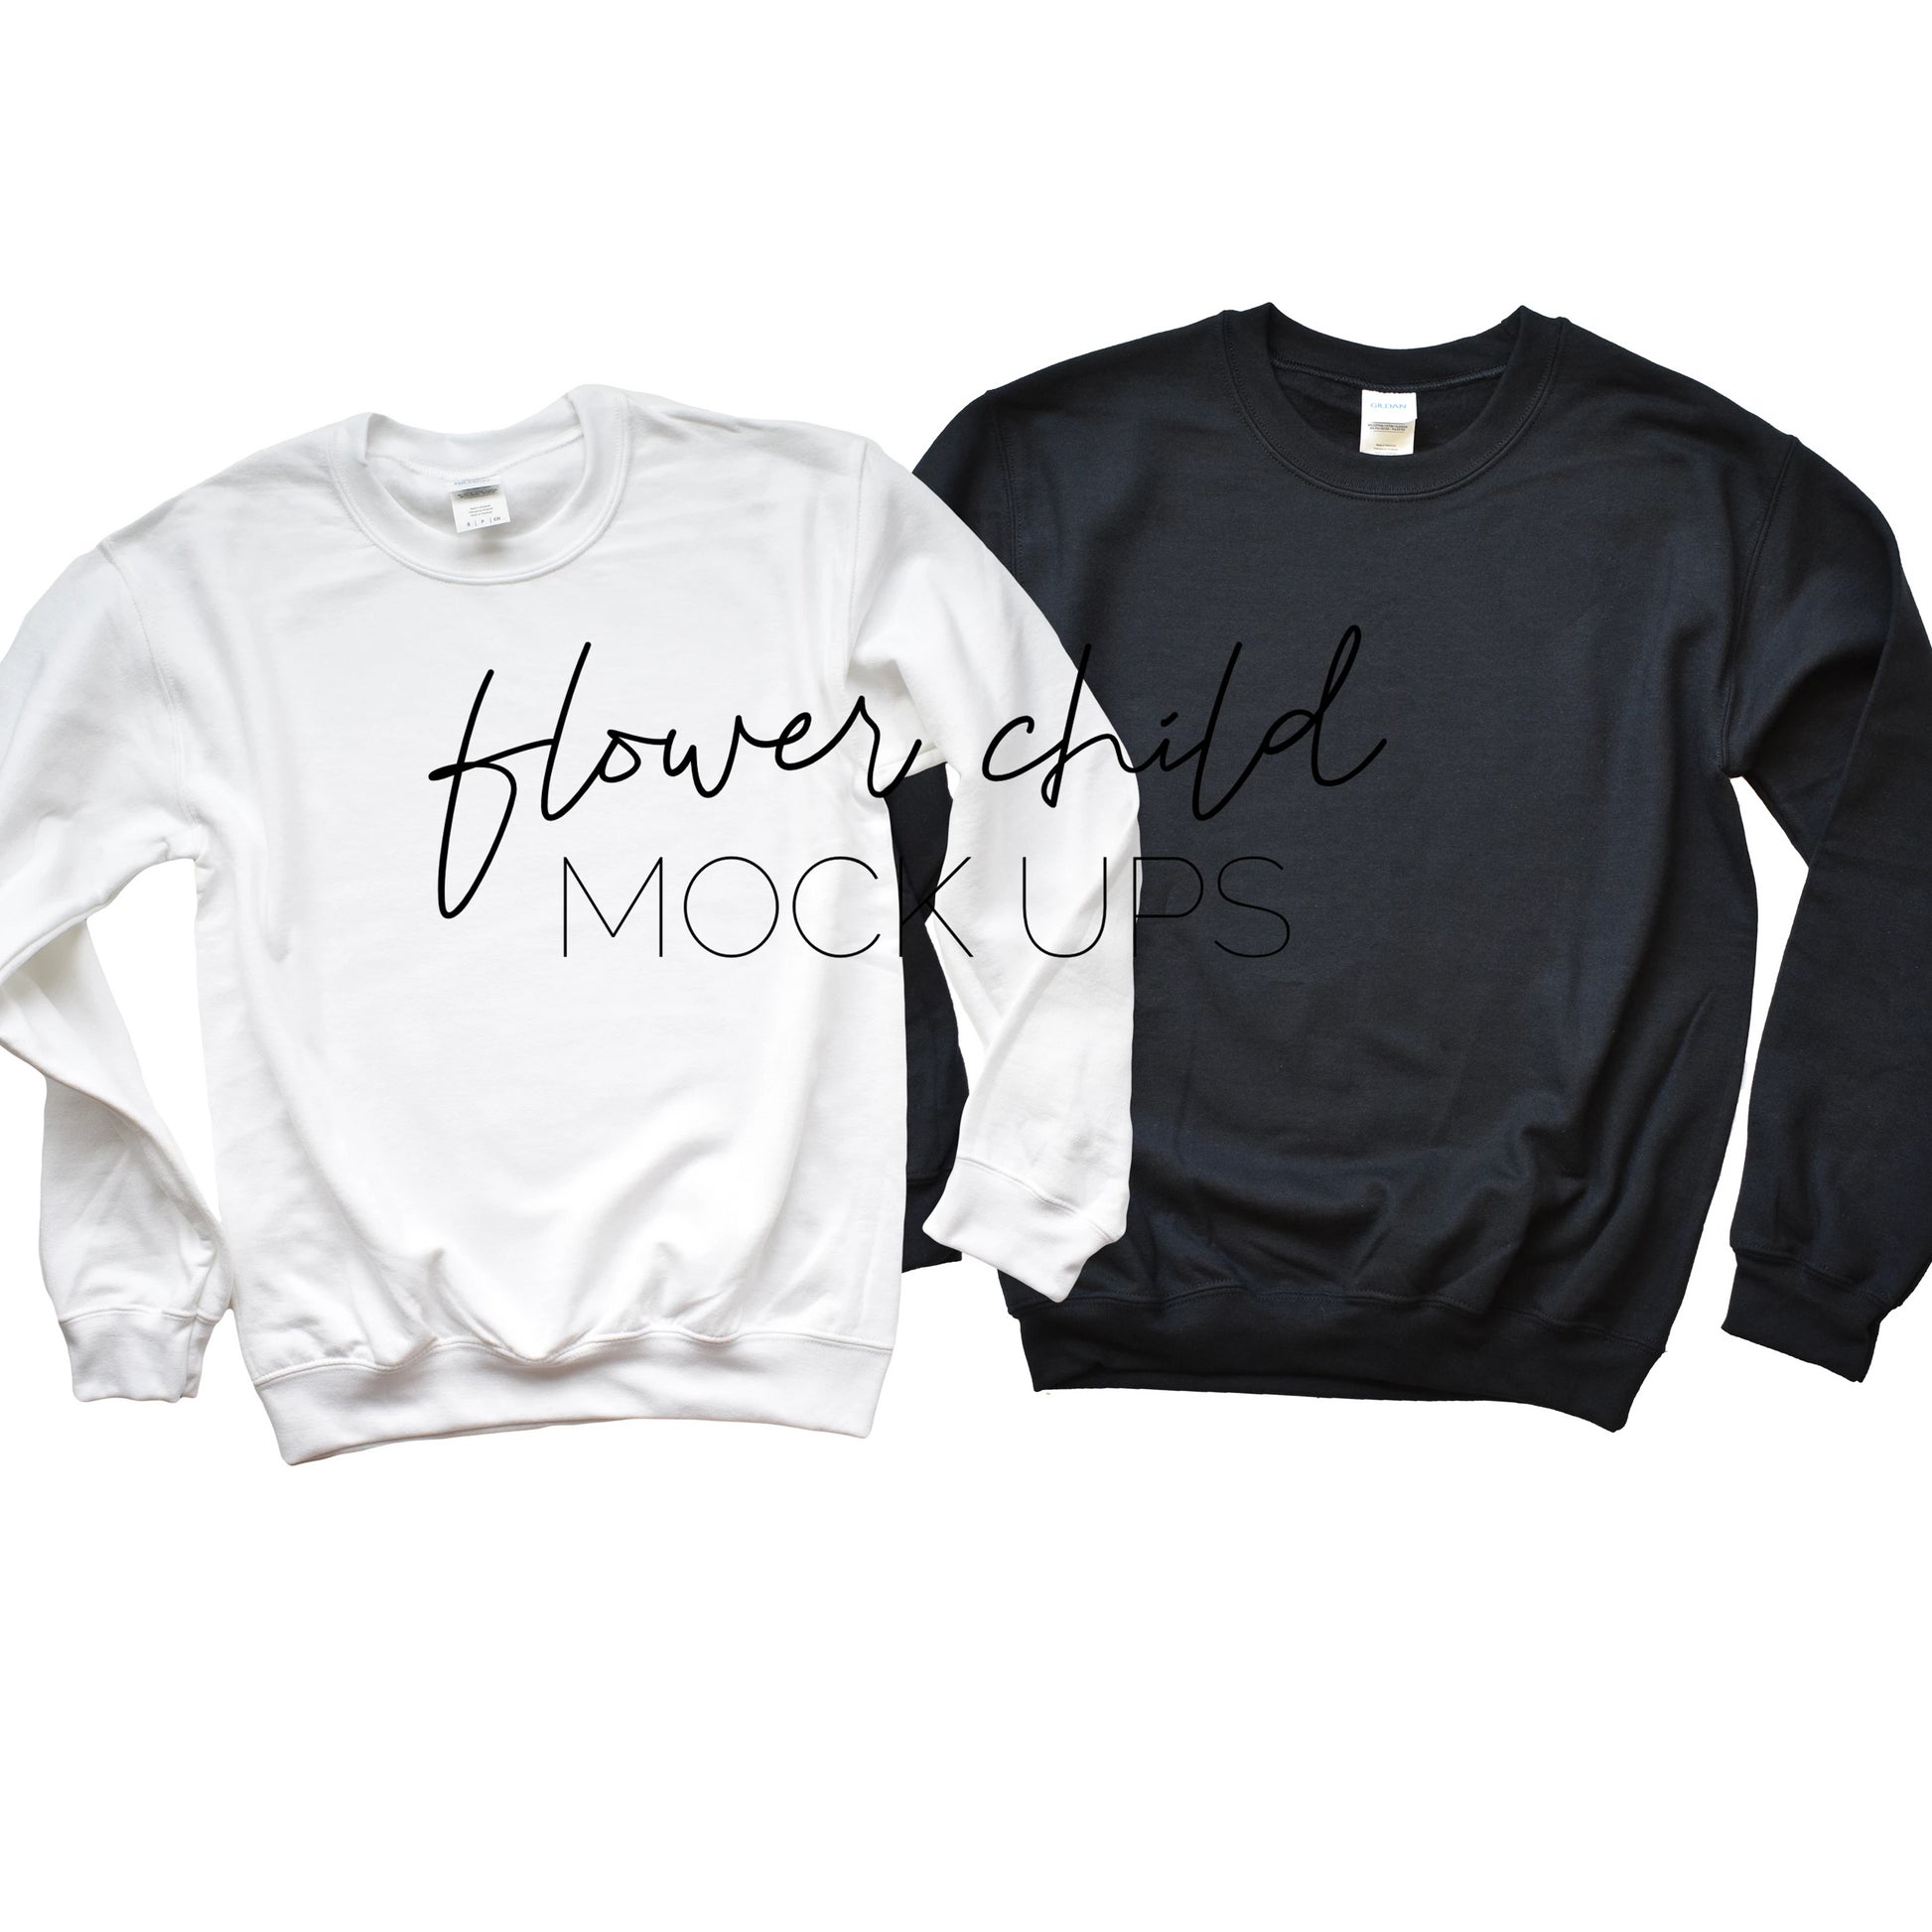 Gildan 18000 Sweatshirt Mock-up Black + White - flowerchildmockups